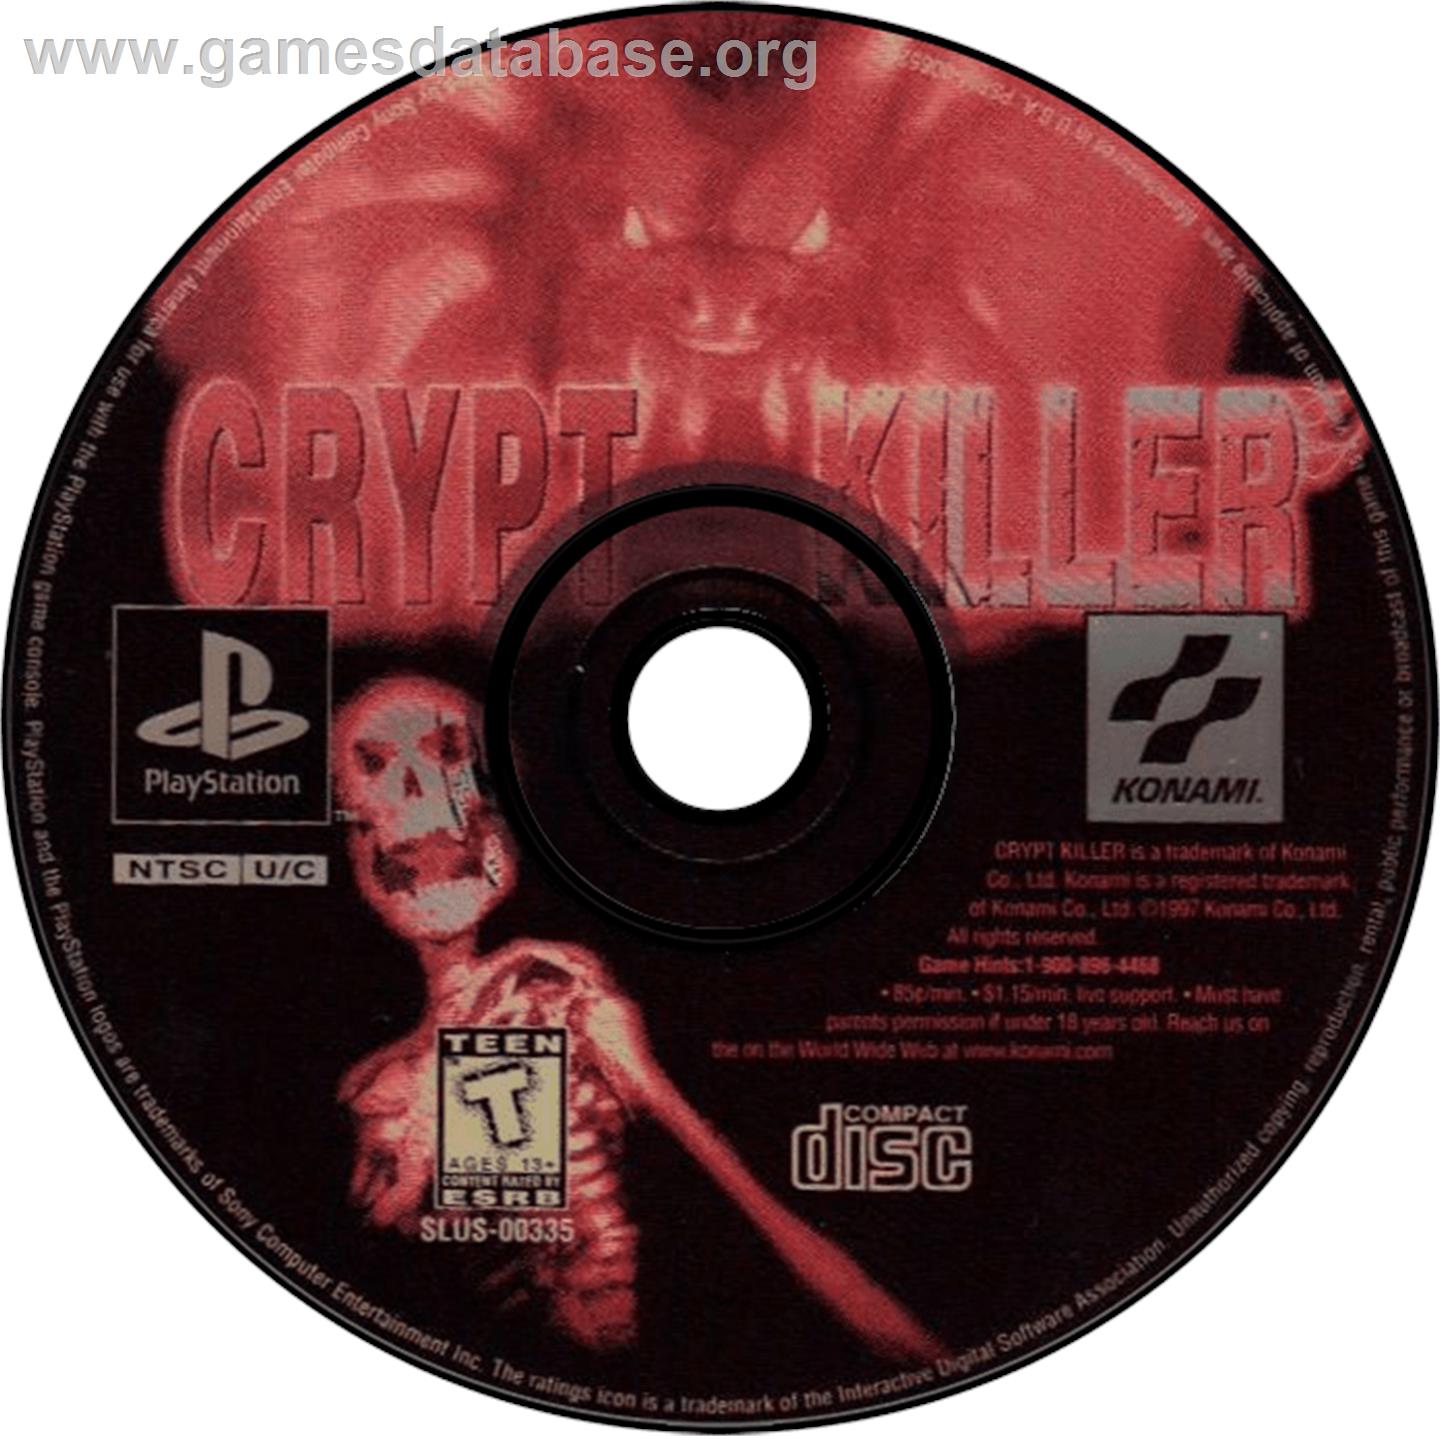 Crypt Killer - Sony Playstation - Artwork - Disc